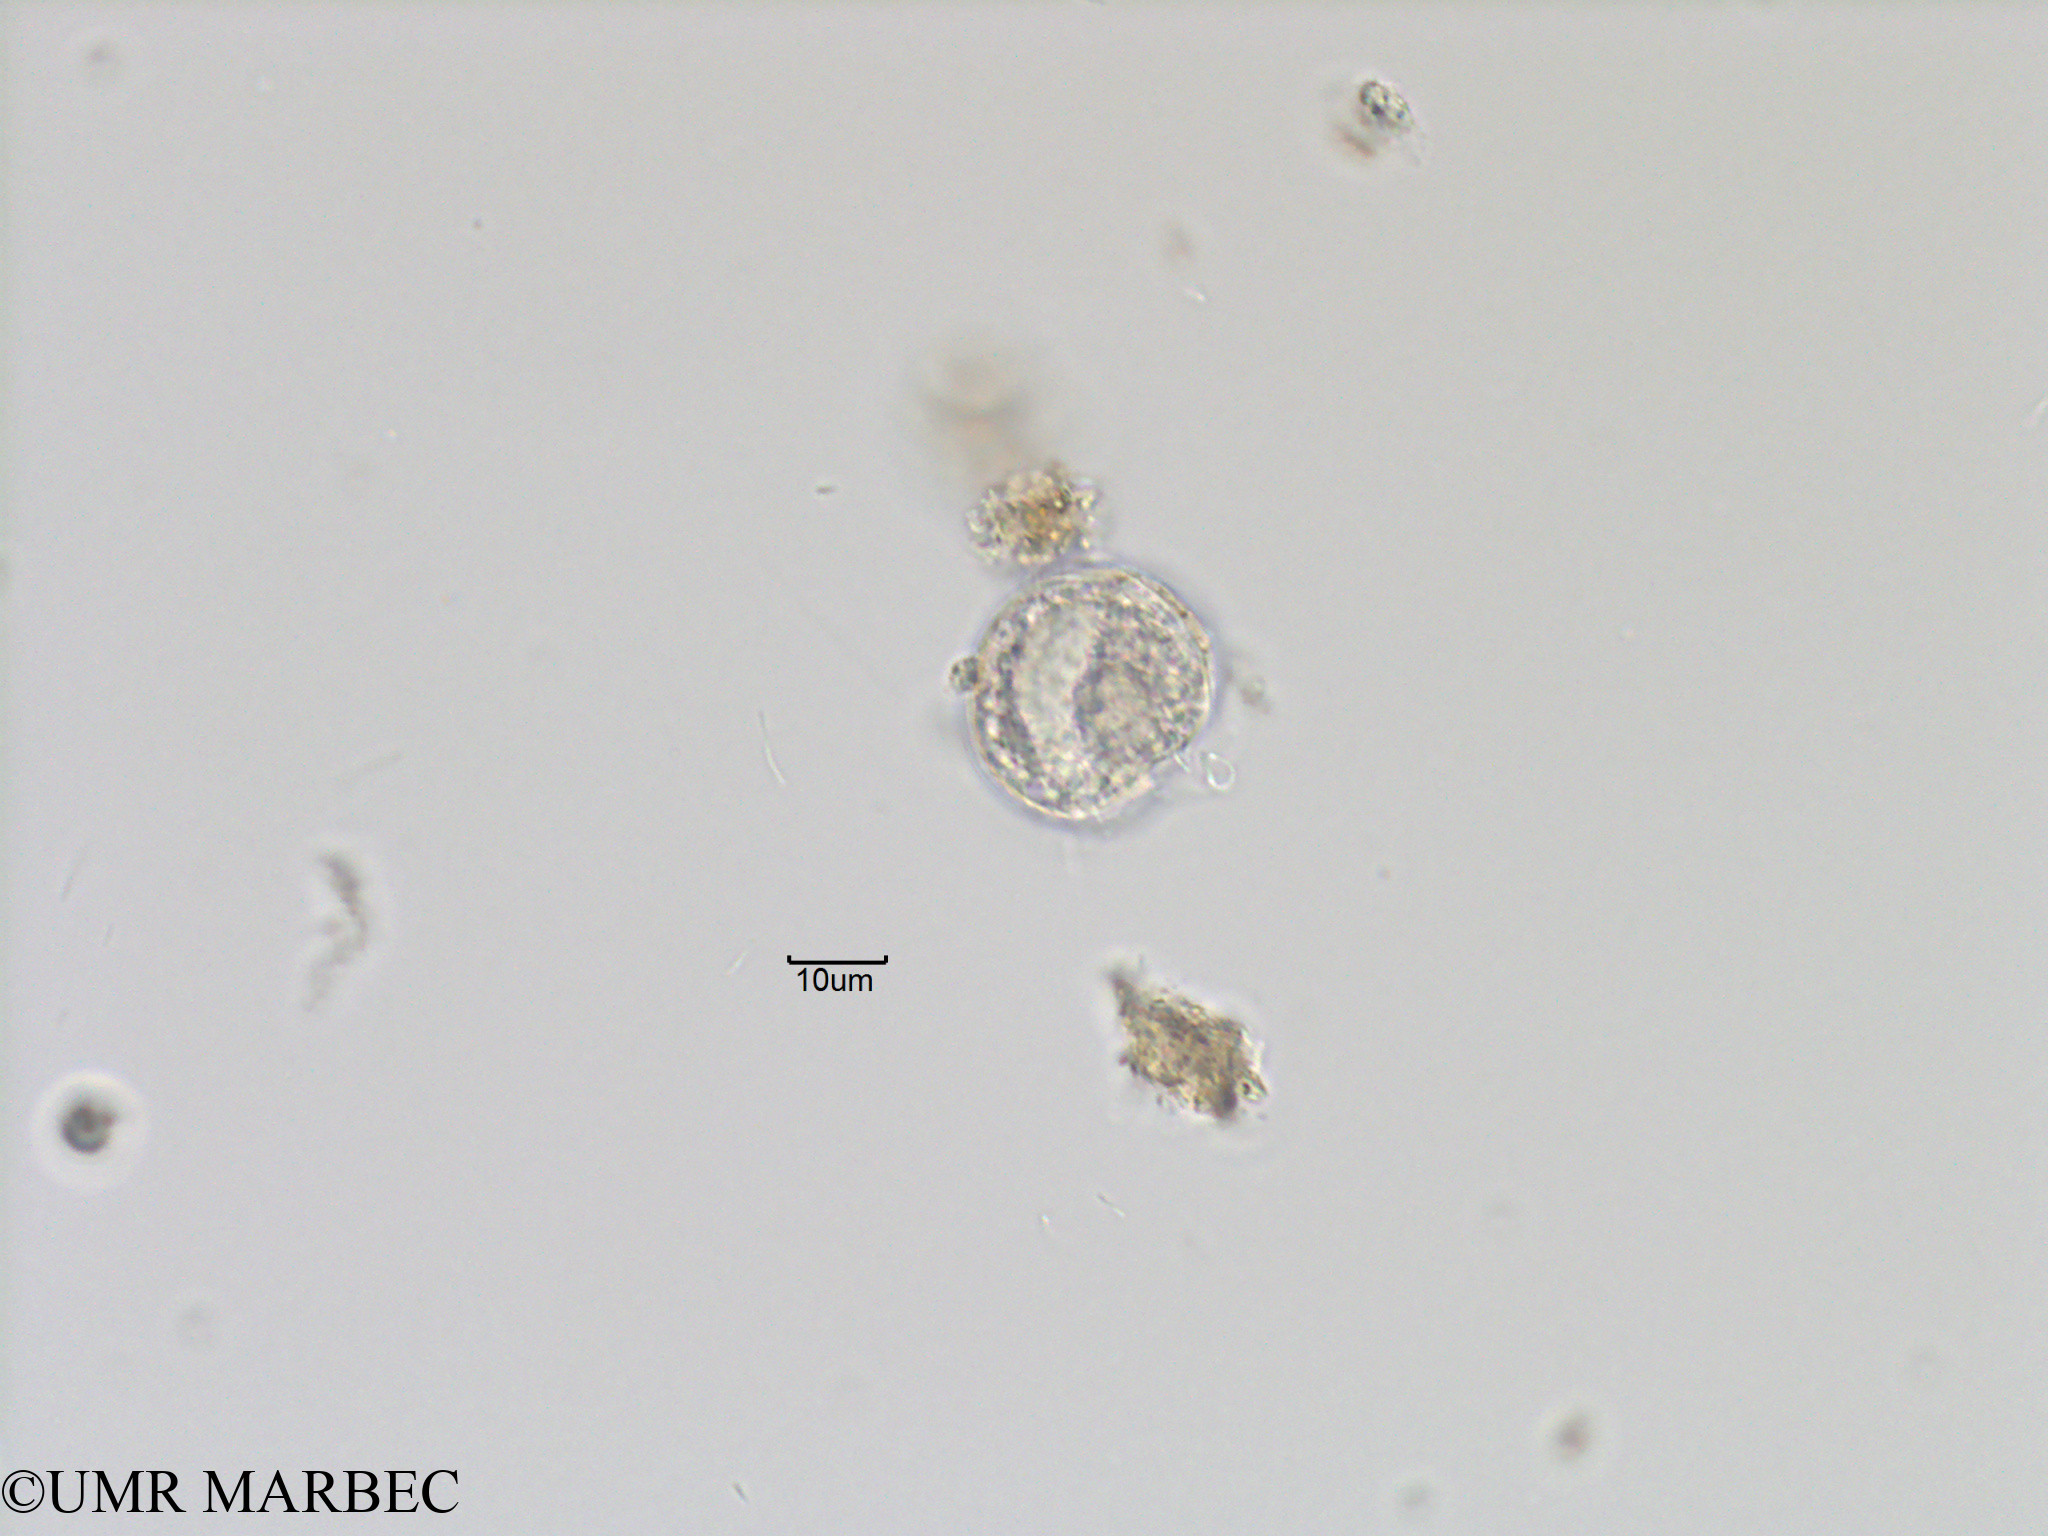 phyto/Bizerte/bizerte_bay/RISCO November 2015/Protoperidinium sp45 (Baie_T5-C2-Dino cf proto-4).tif(copy).jpg